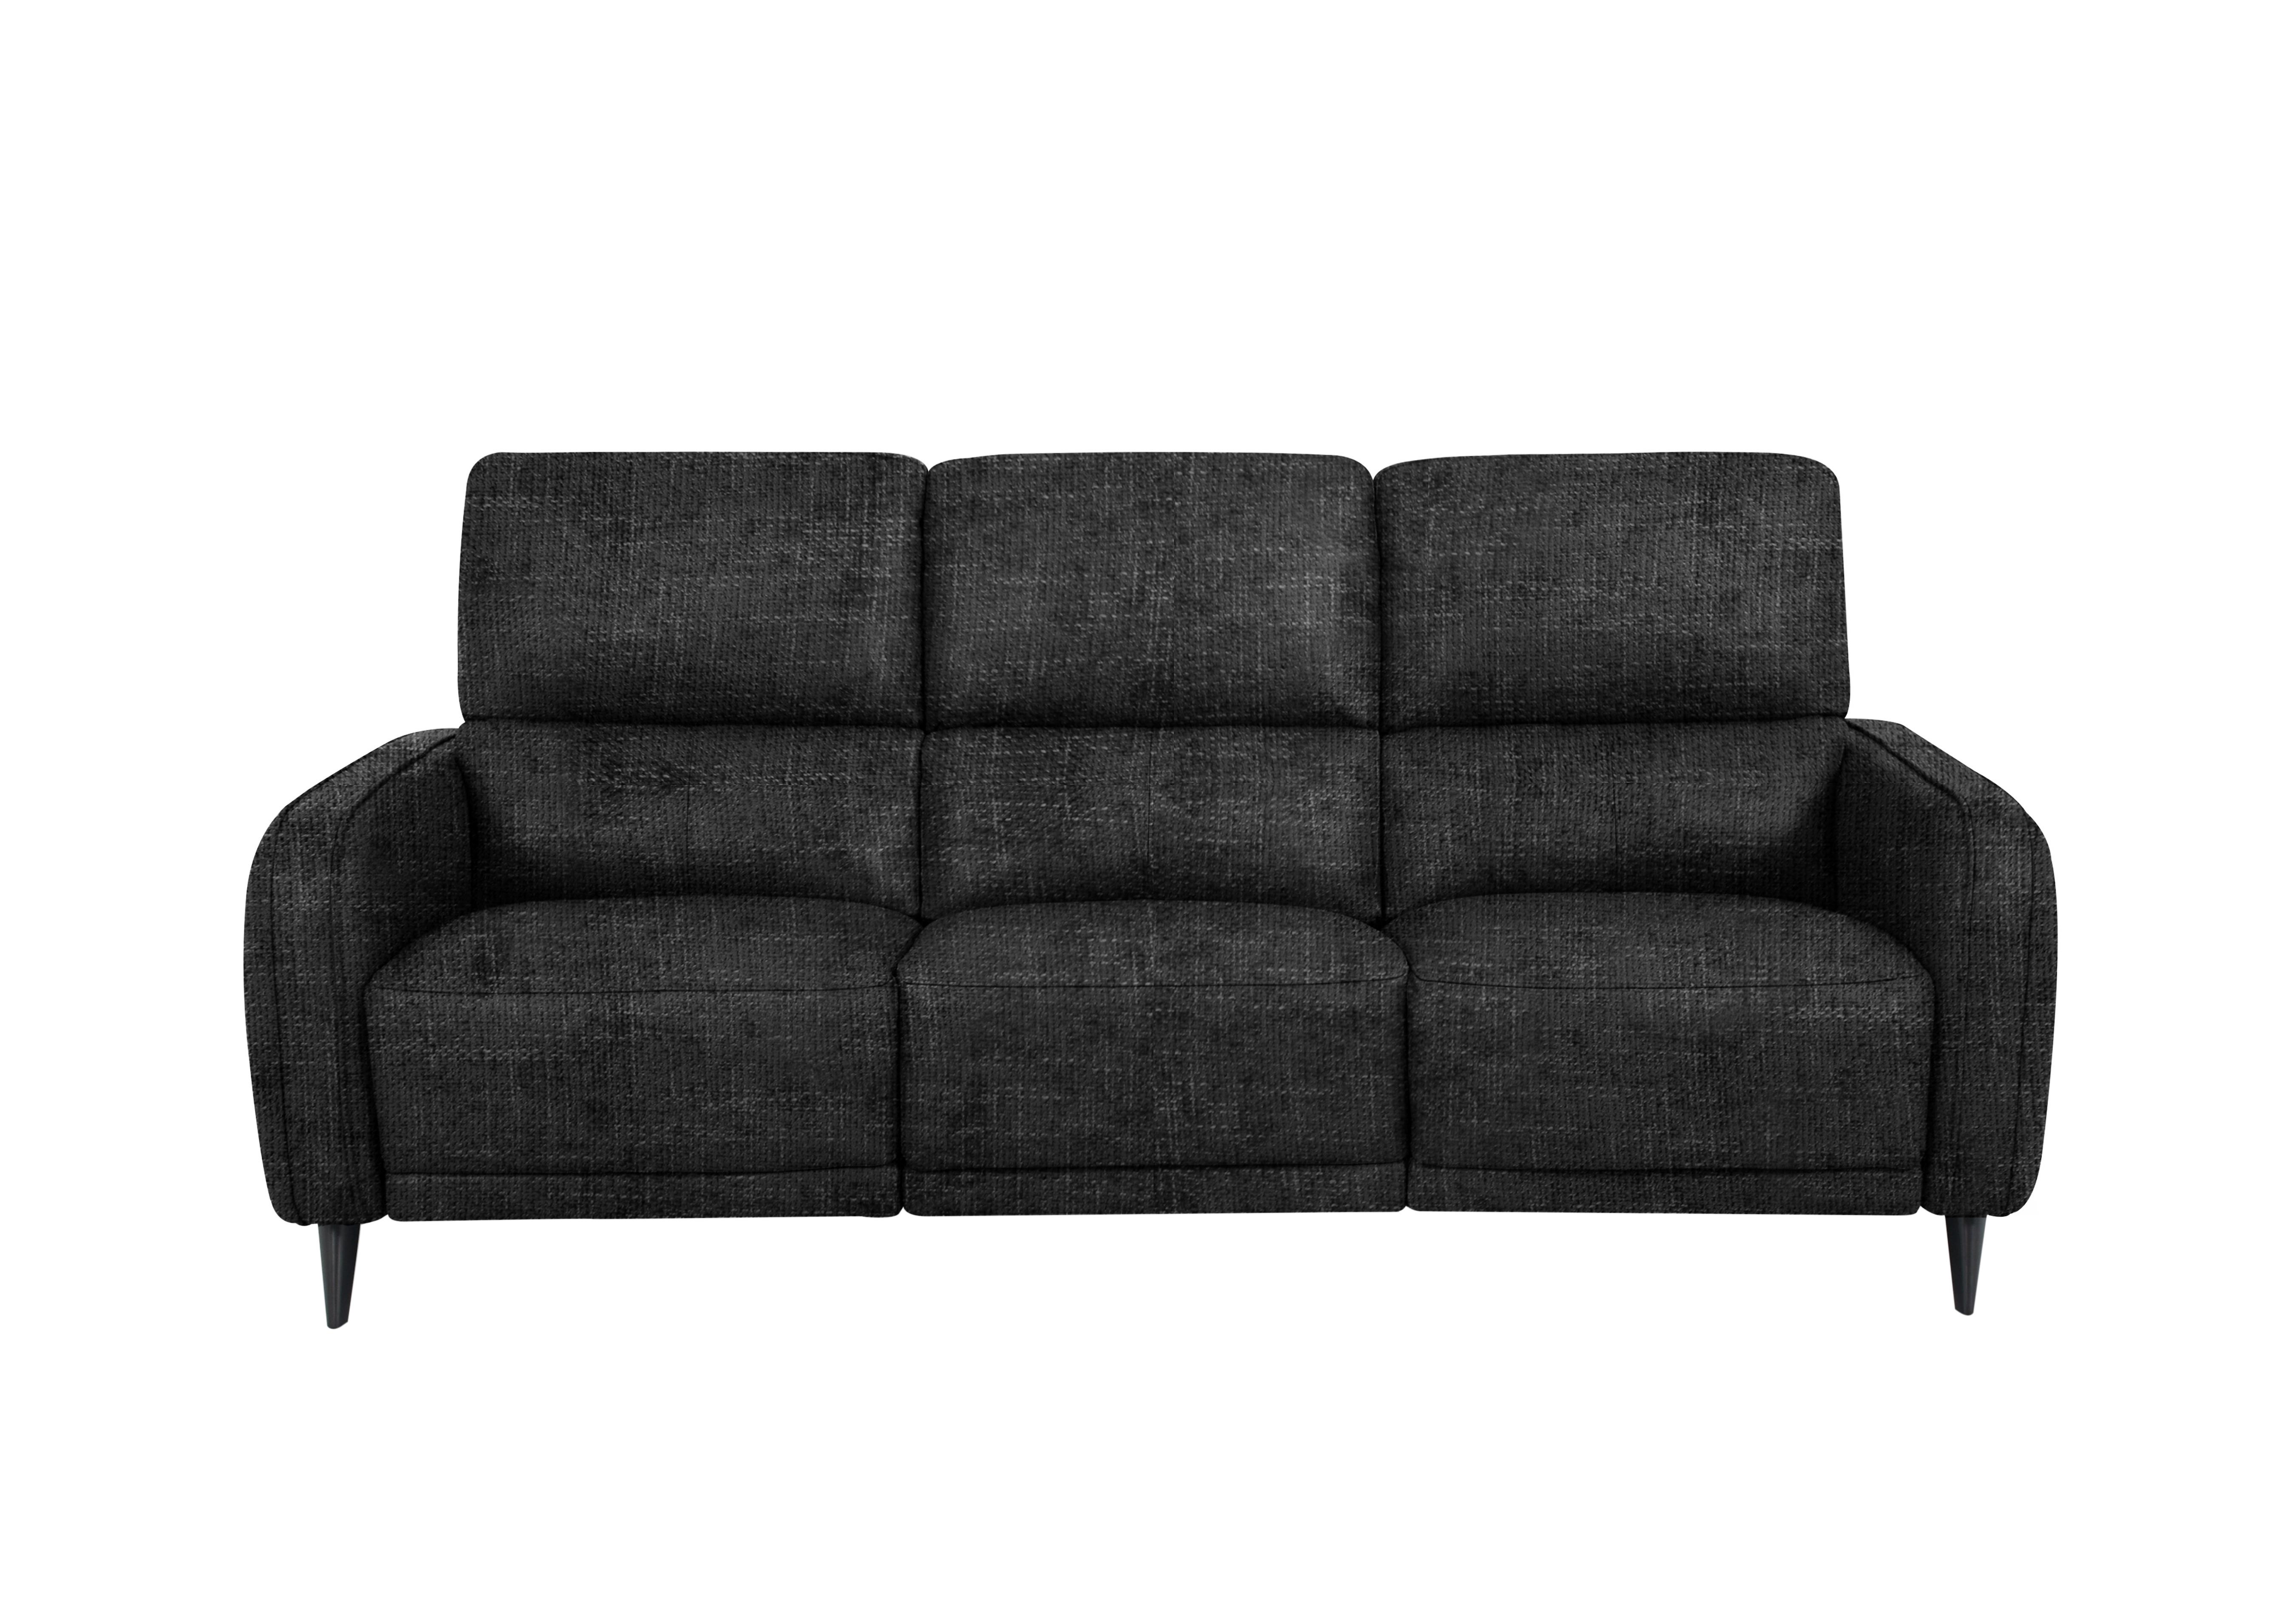 Logan 3 Seater Fabric Sofa in Fab-Cac-R463 Black Mica on Furniture Village